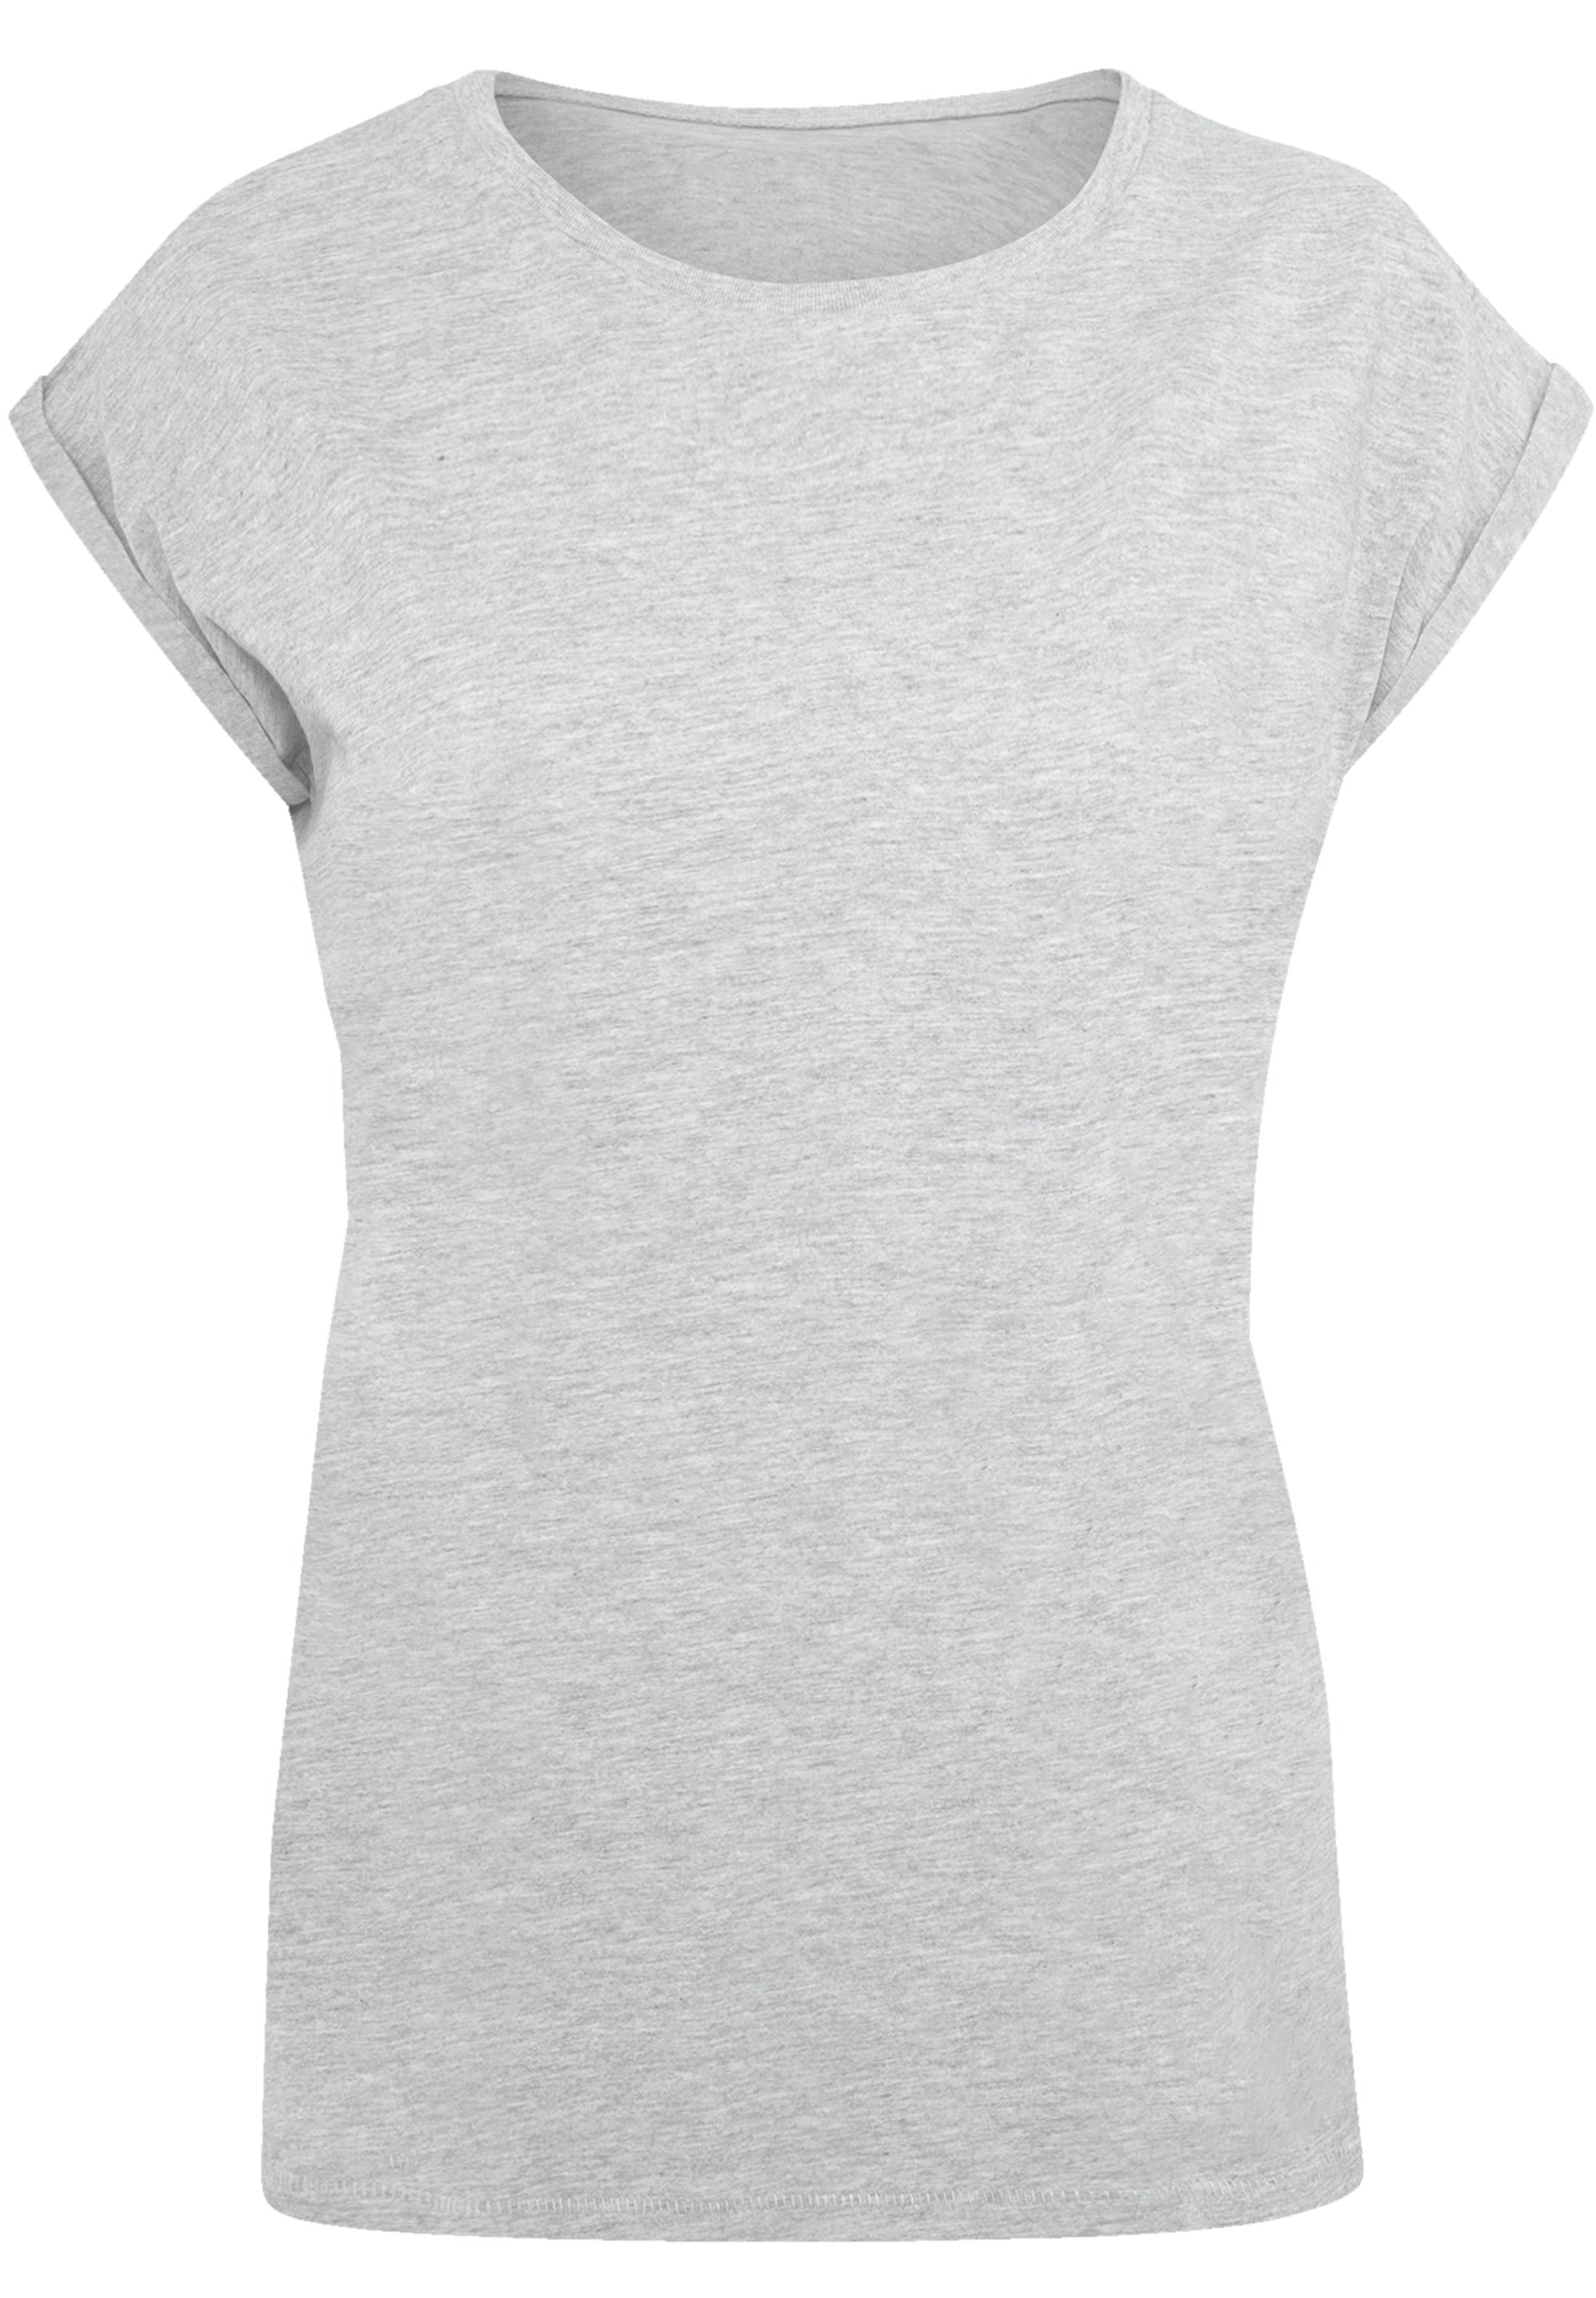 Bora »PLUS kaufen T-Shirt | F4NT4STIC Leewards Bora BAUR SIZE Island«, Print für